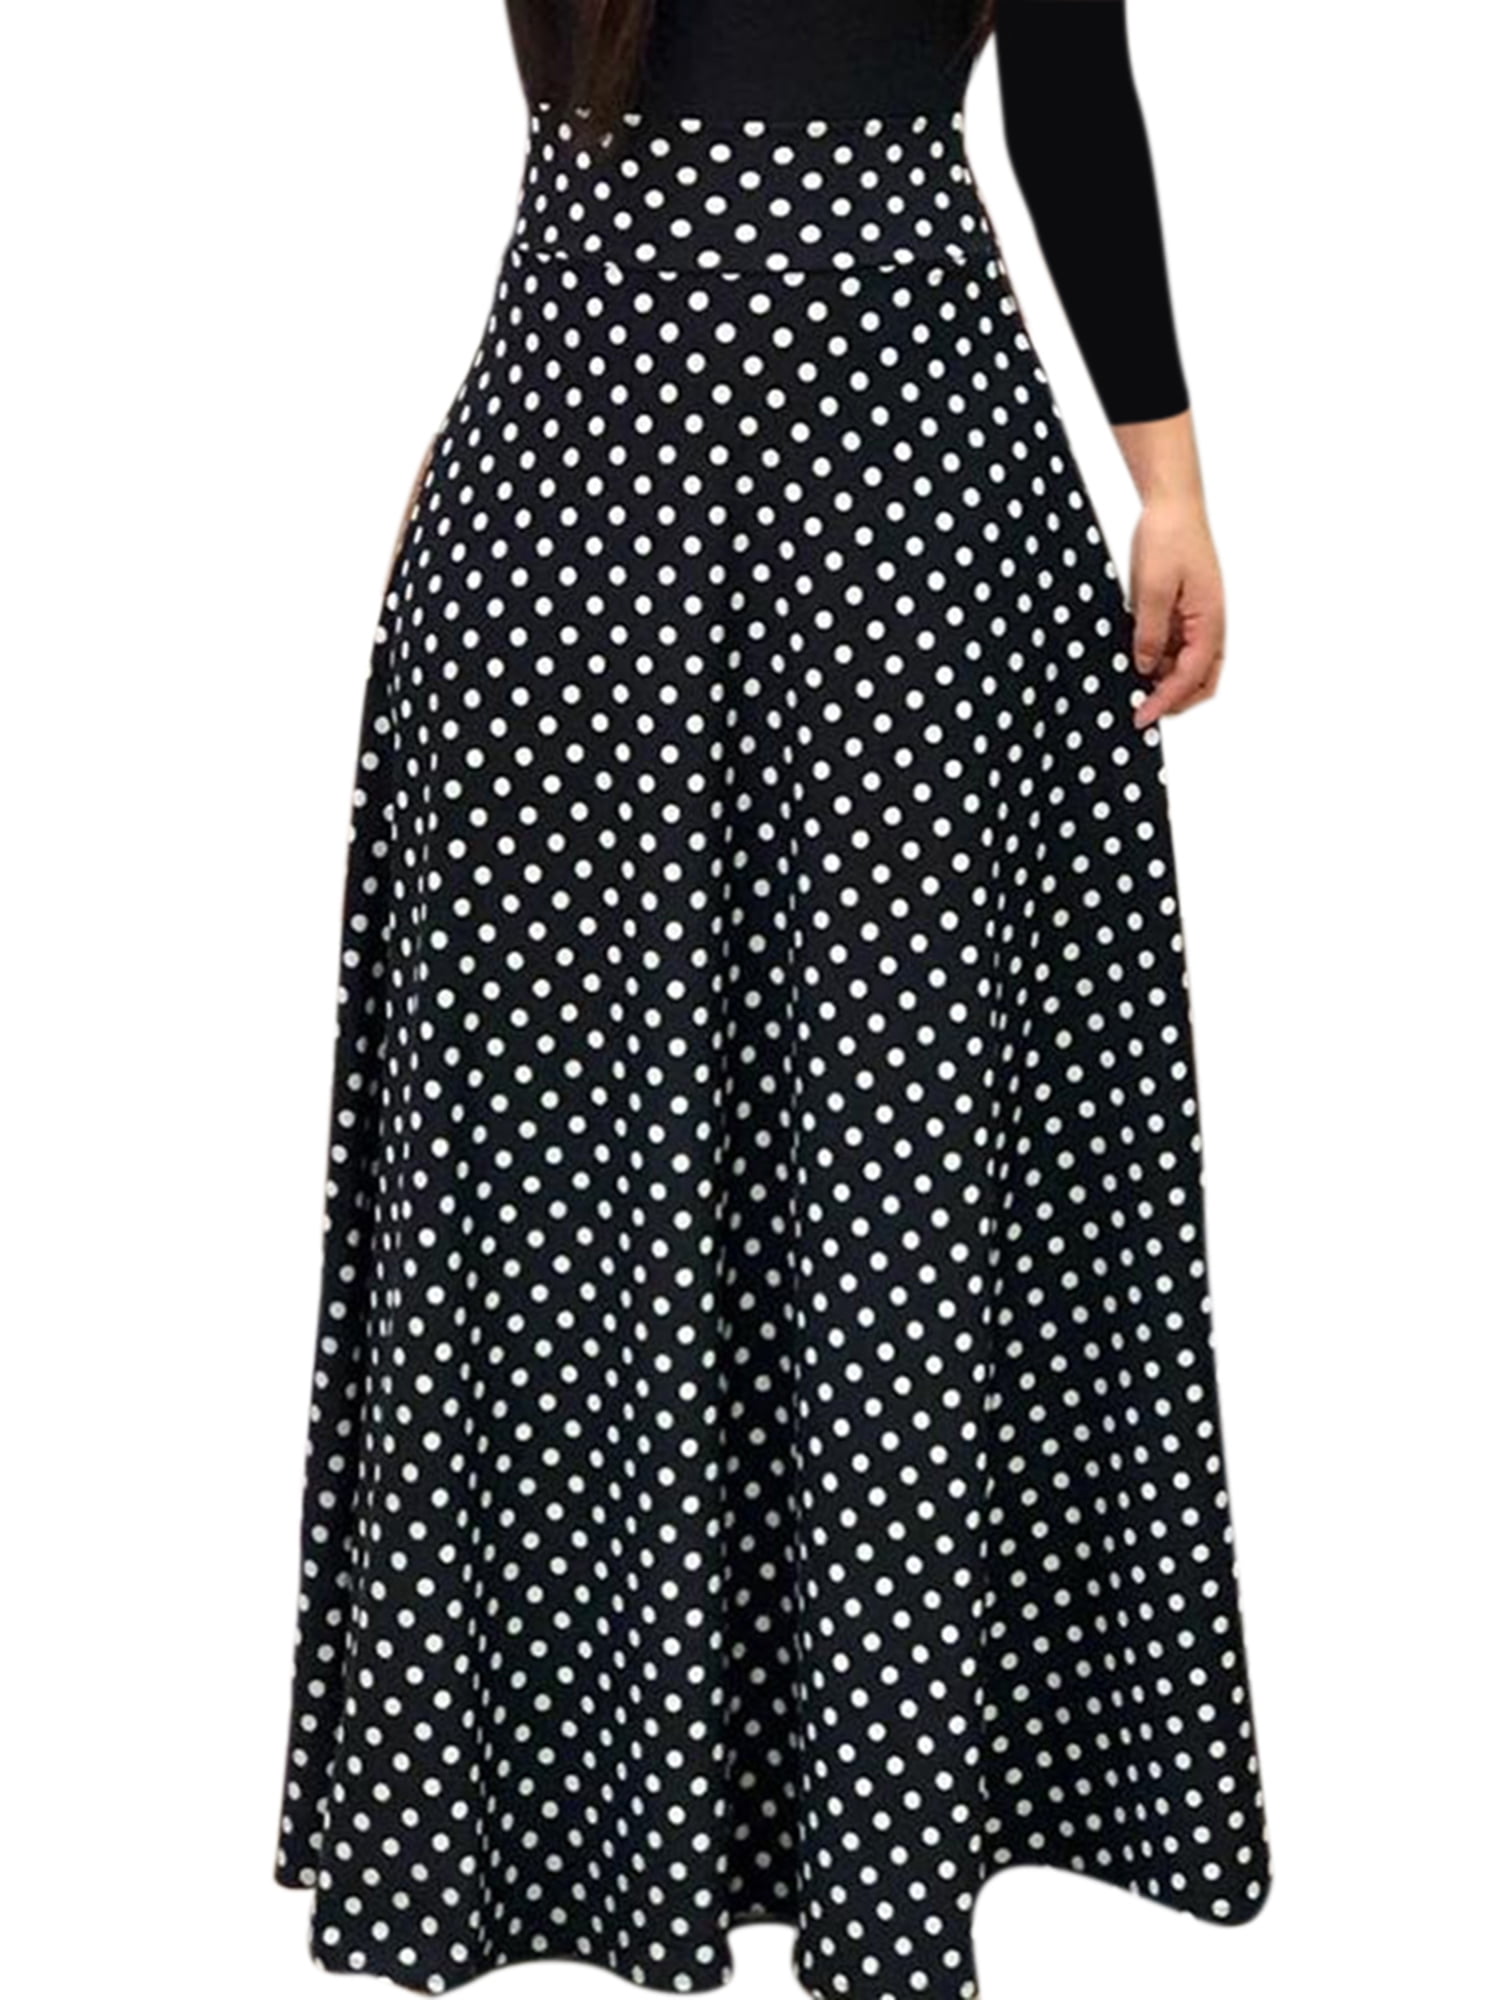 iLUGU Boat Collar Sleeveless Mini Dress for Women Feather Print Pocket Shoulder Strape Vintage Dress 